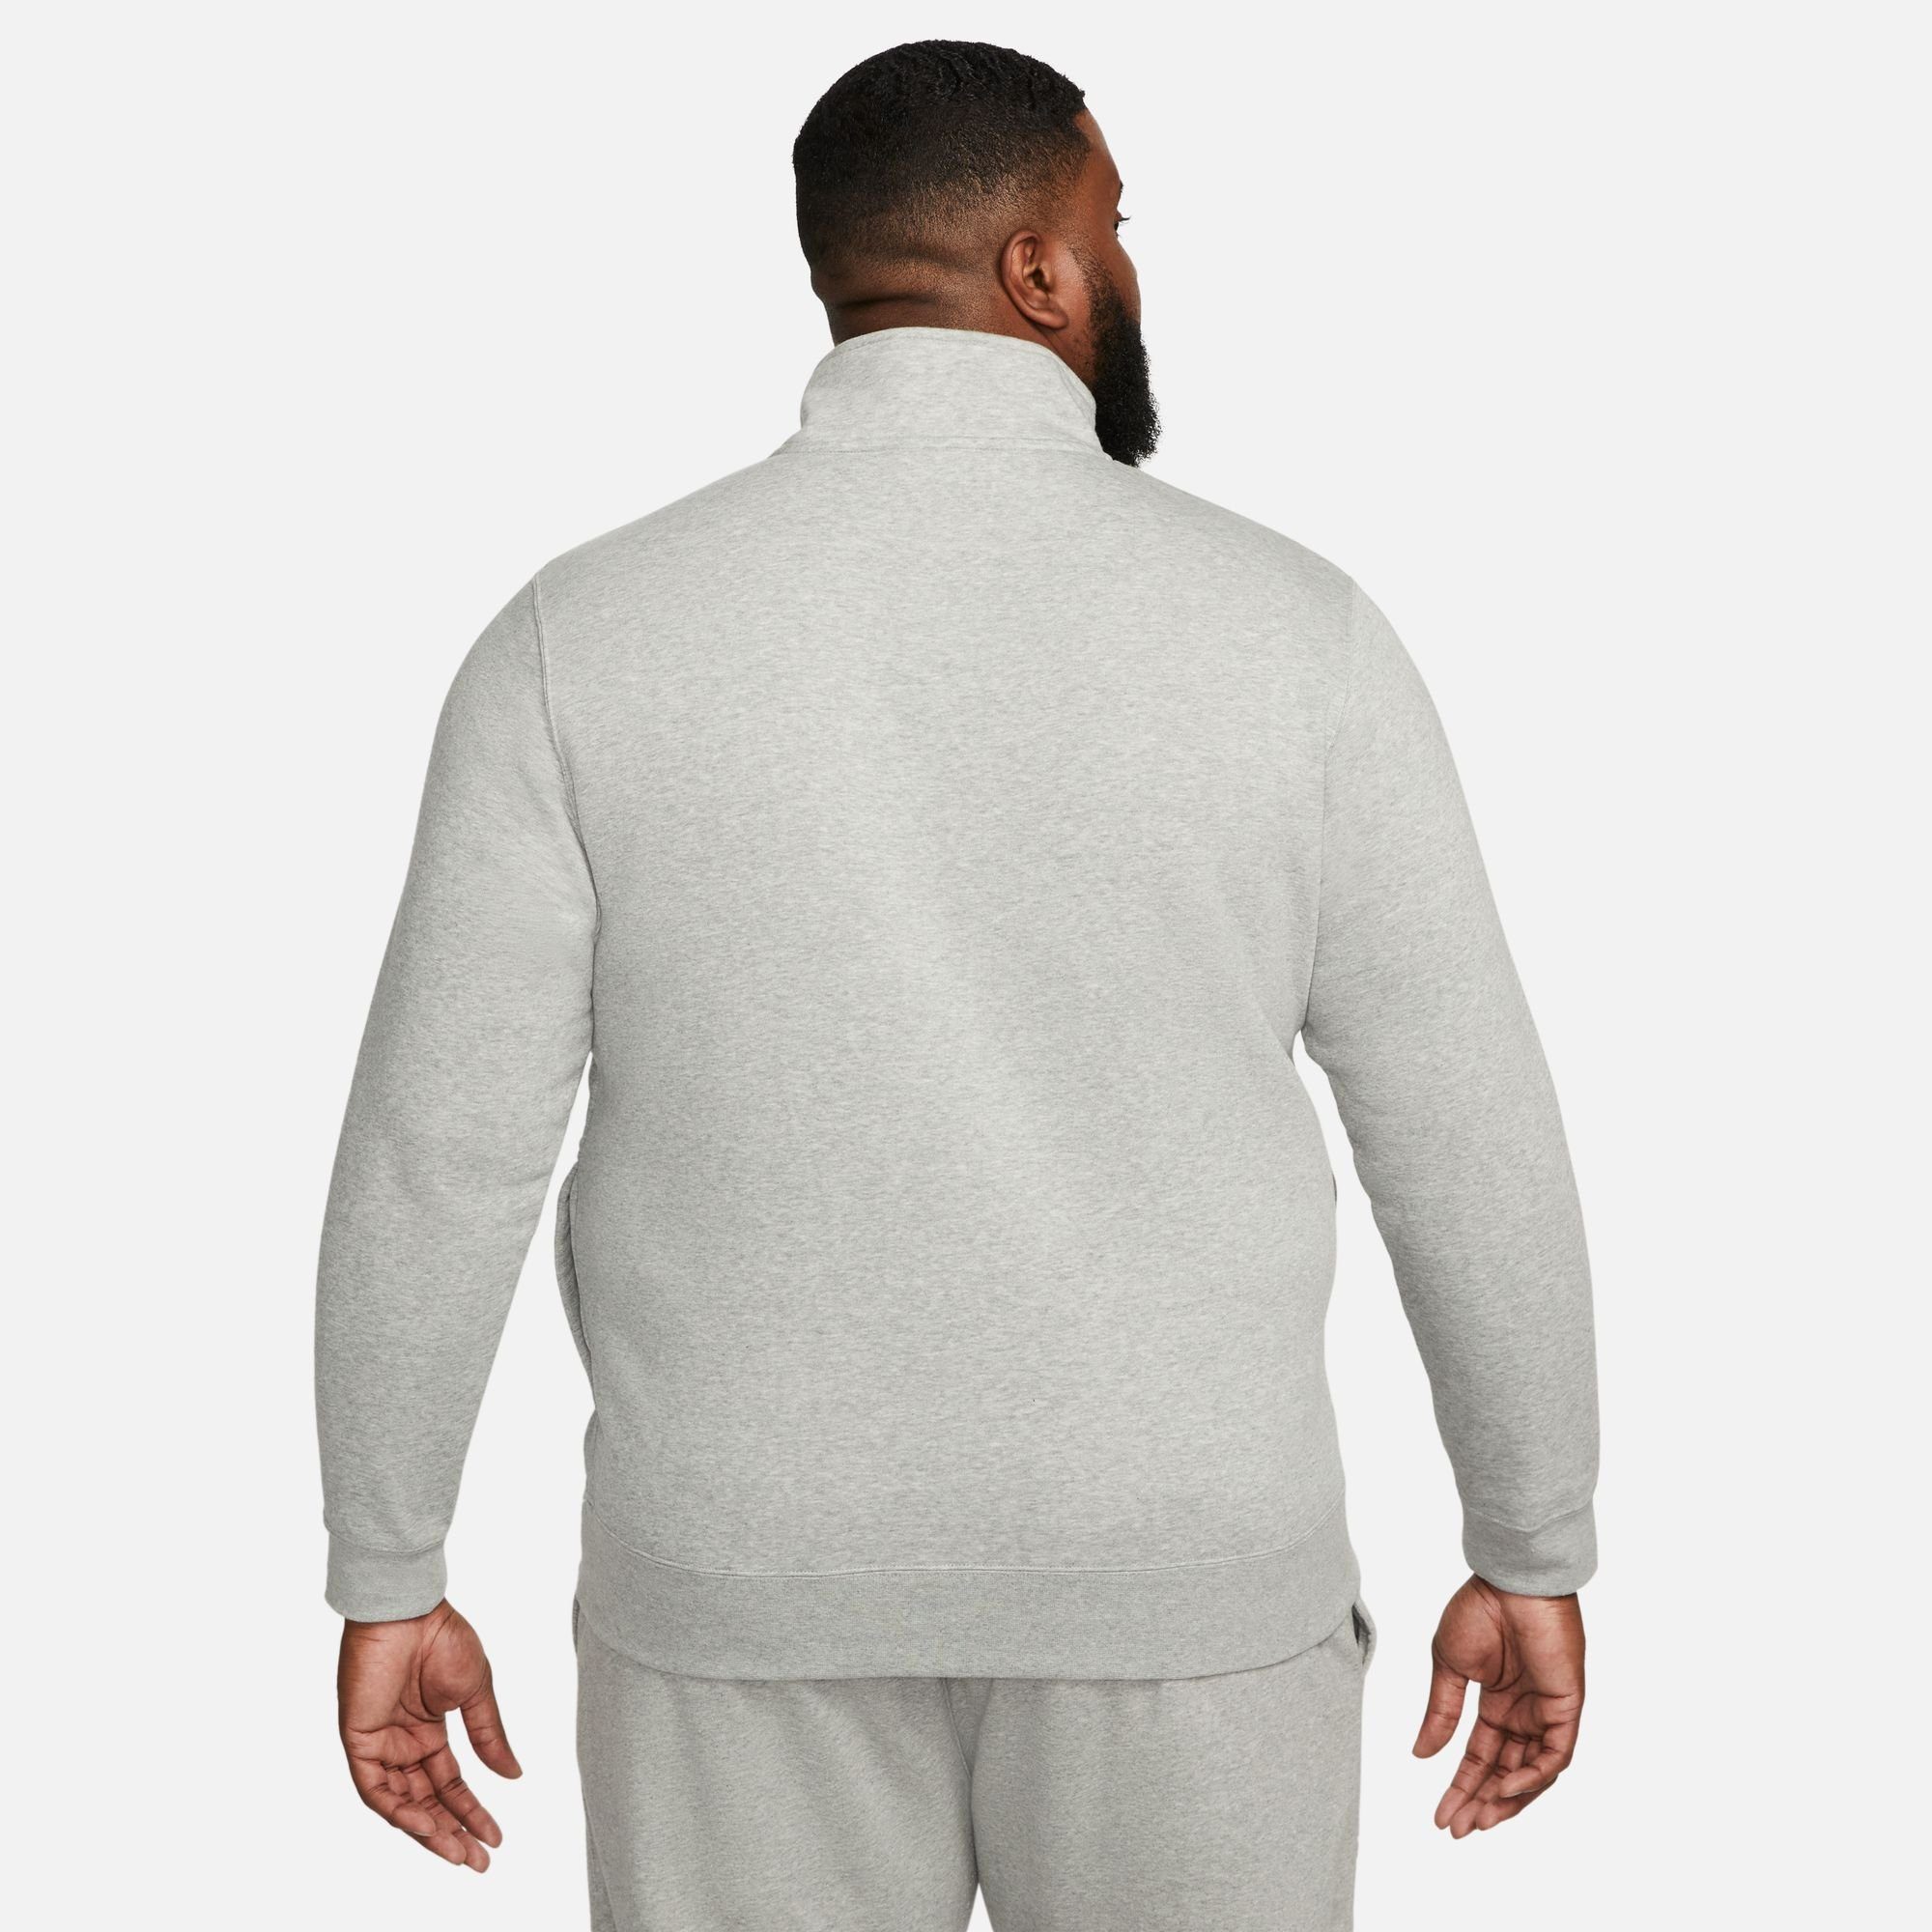 HEATHER/WHITE/WHITE PULLOVER CLUB Nike Sportswear MEN'S Sweatshirt 1/-ZIP DK GREY BRUSHED-BACK